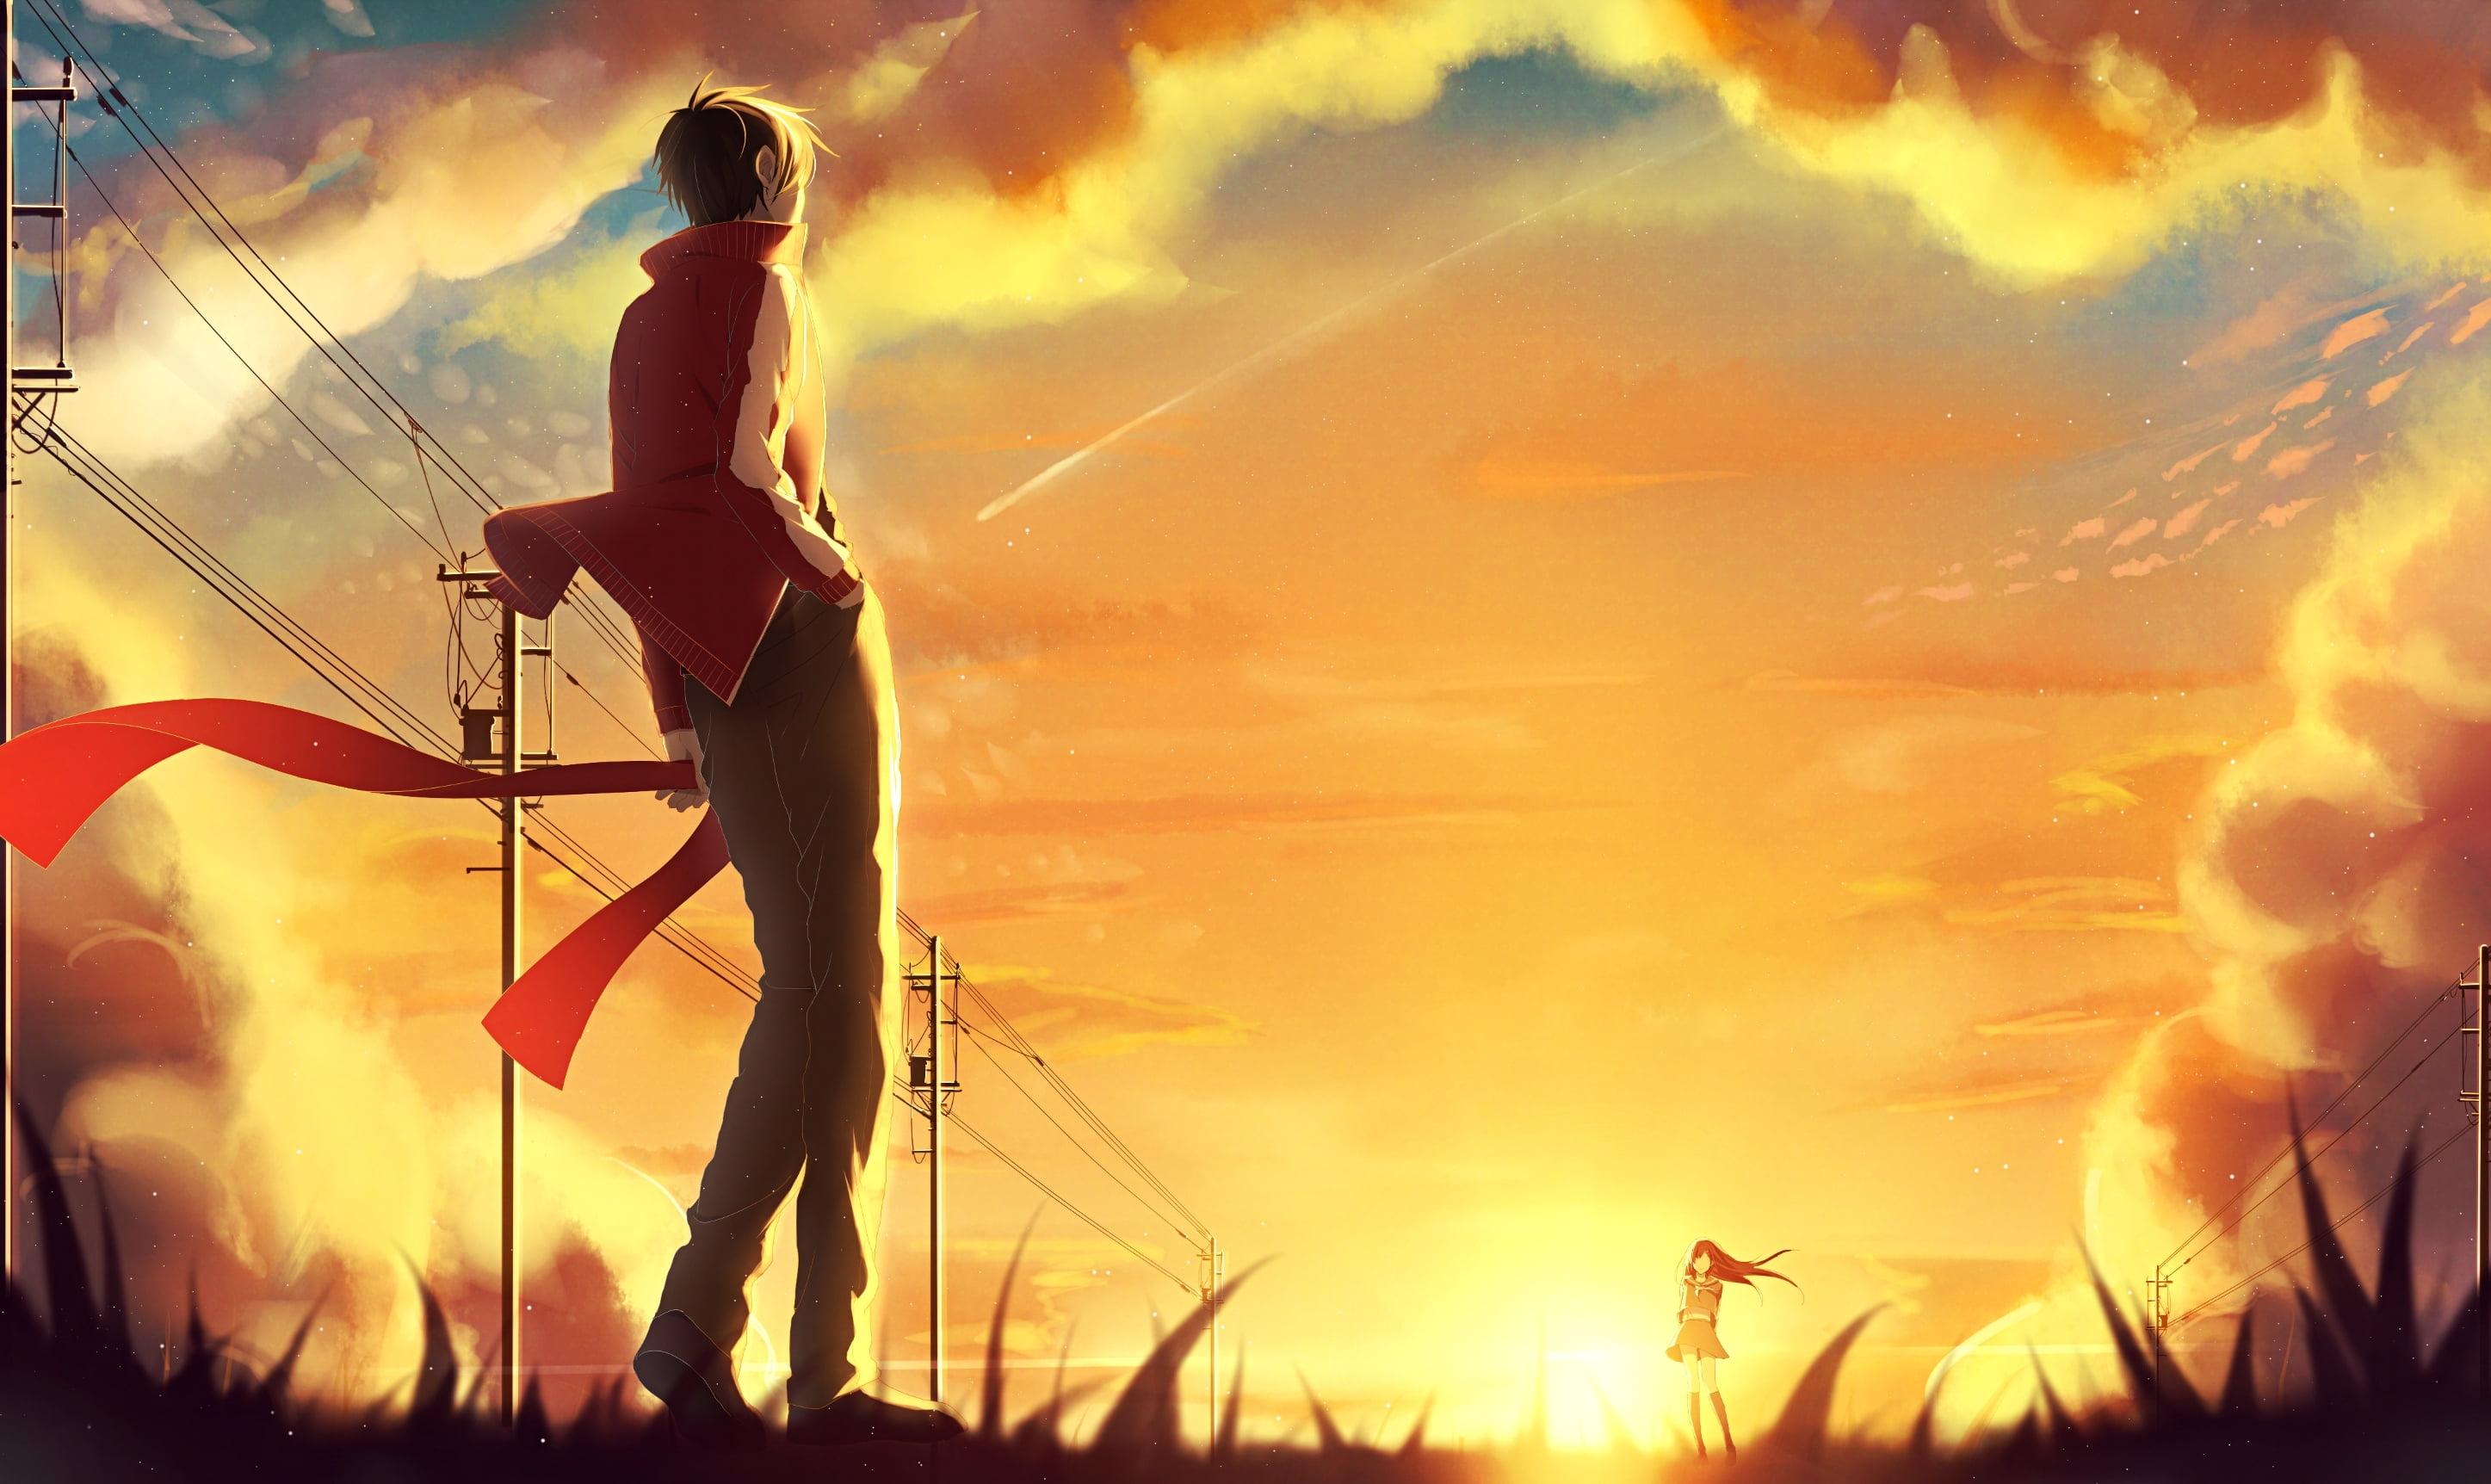 Boy and girl on sunset anime illustration HD wallpaper. Wallpaper